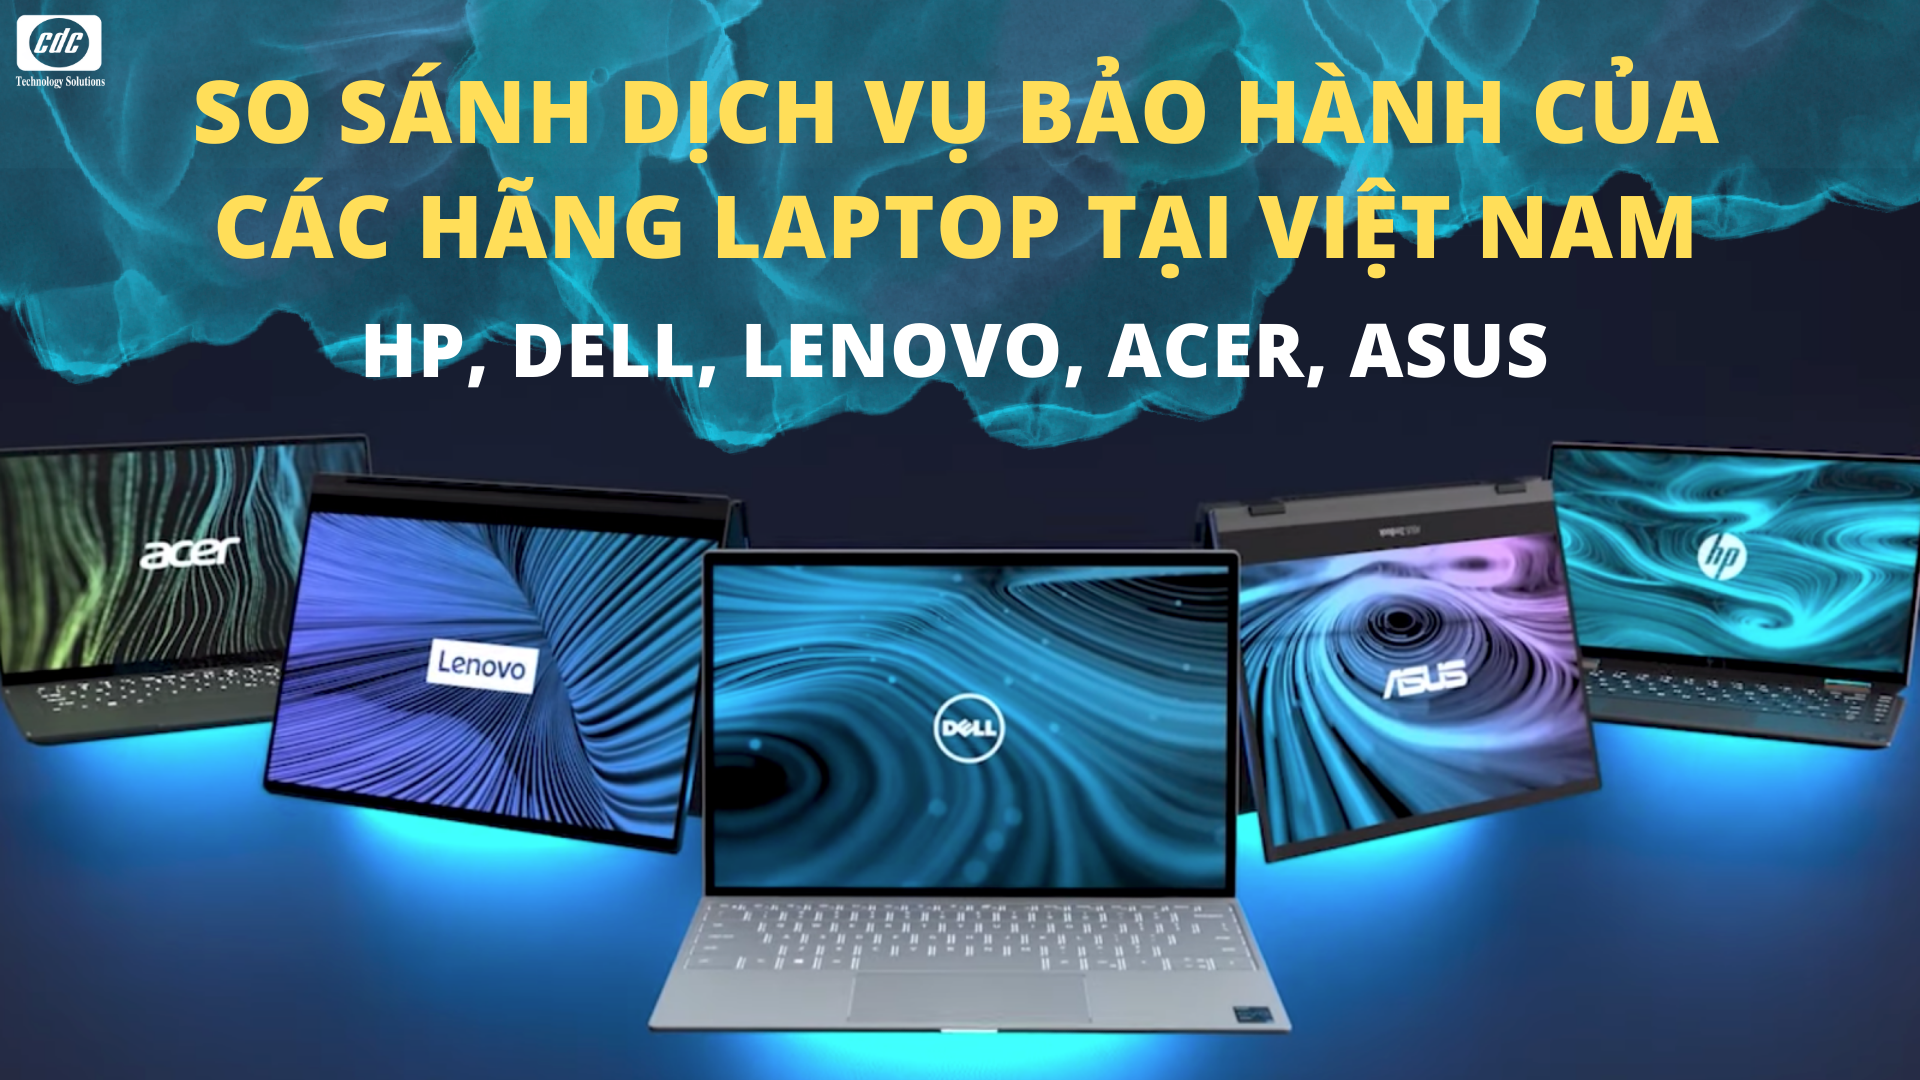 so-sanh-dich-vu-bao-hanh-cua-cac-hang-laptop-tai-viet-nam-hp-dell-lenovo-acer-asus-(01)